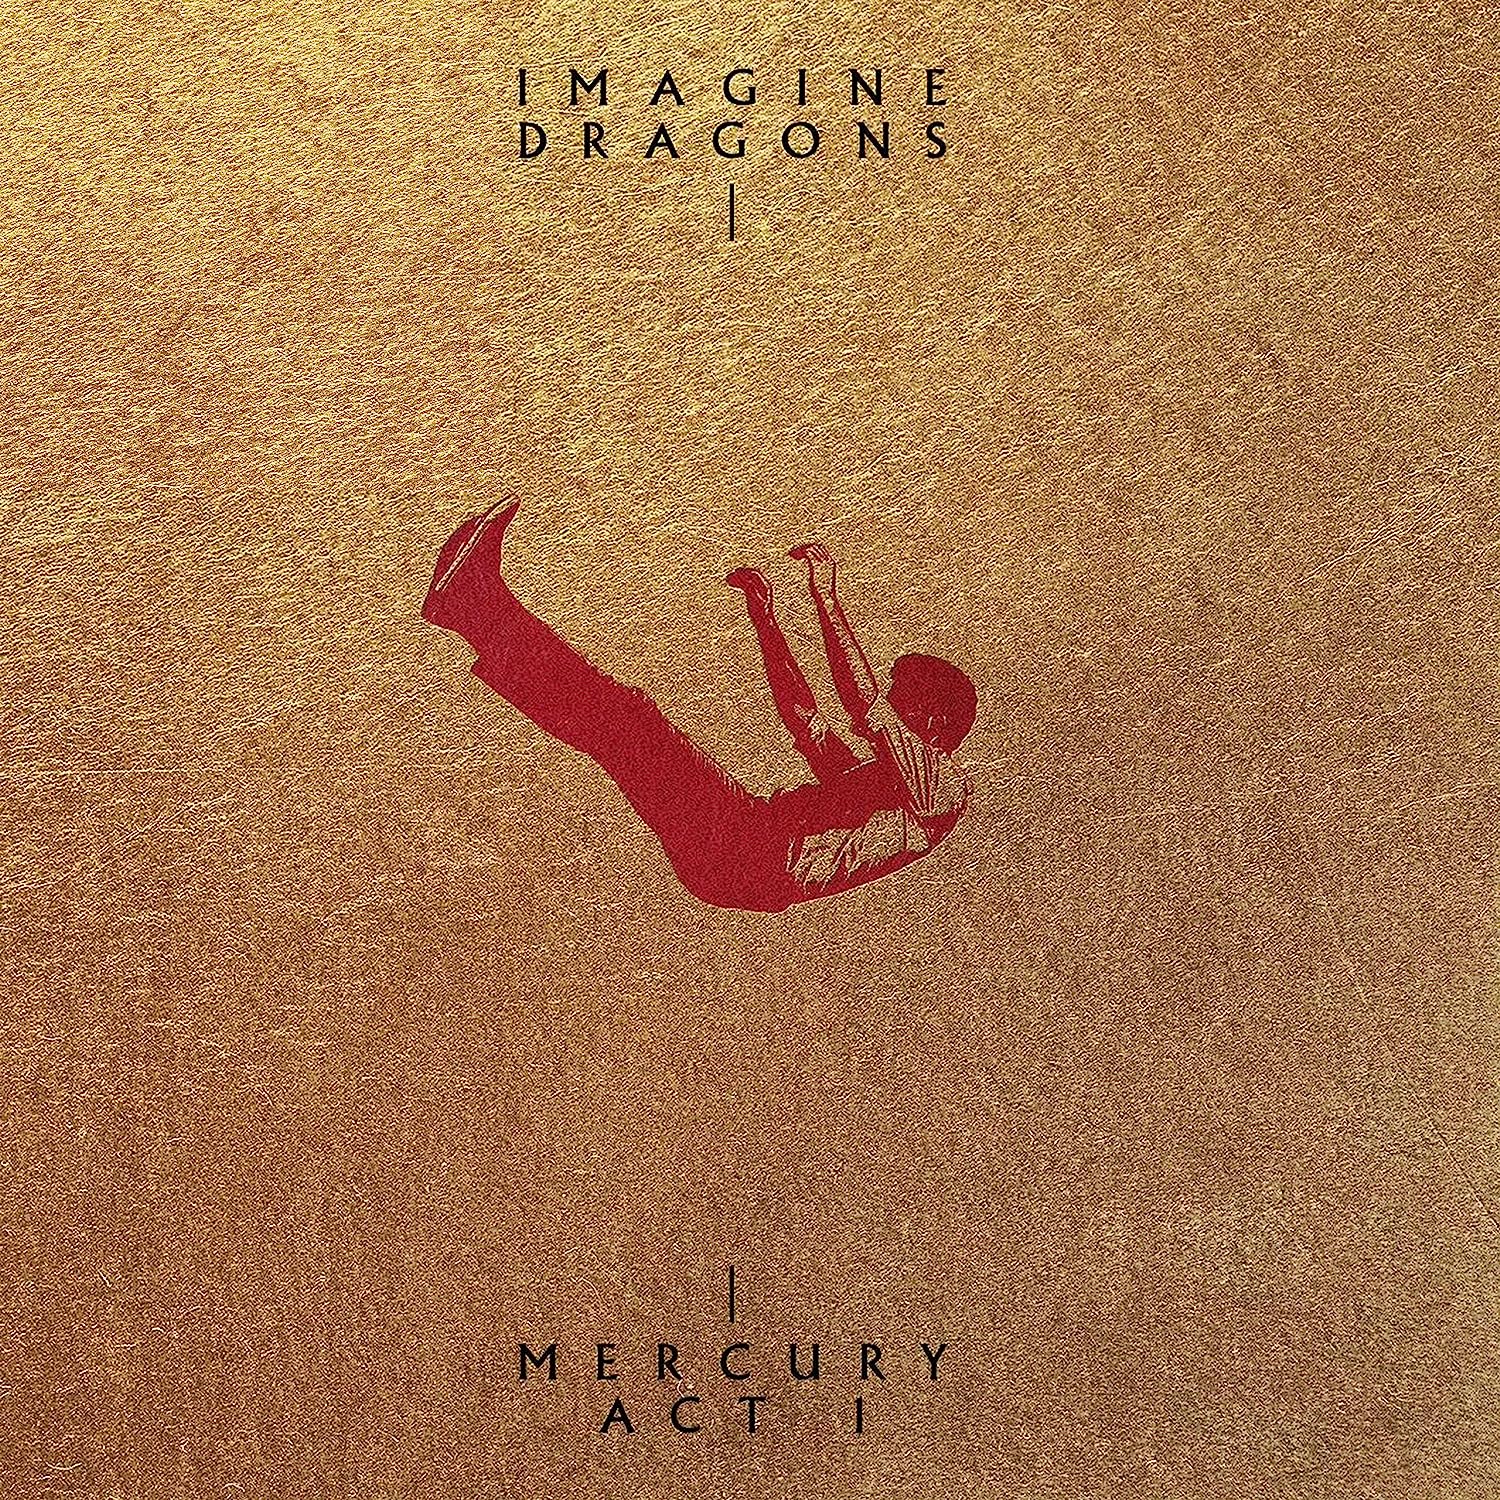 Imagine Dragons: Mercury - Act 1